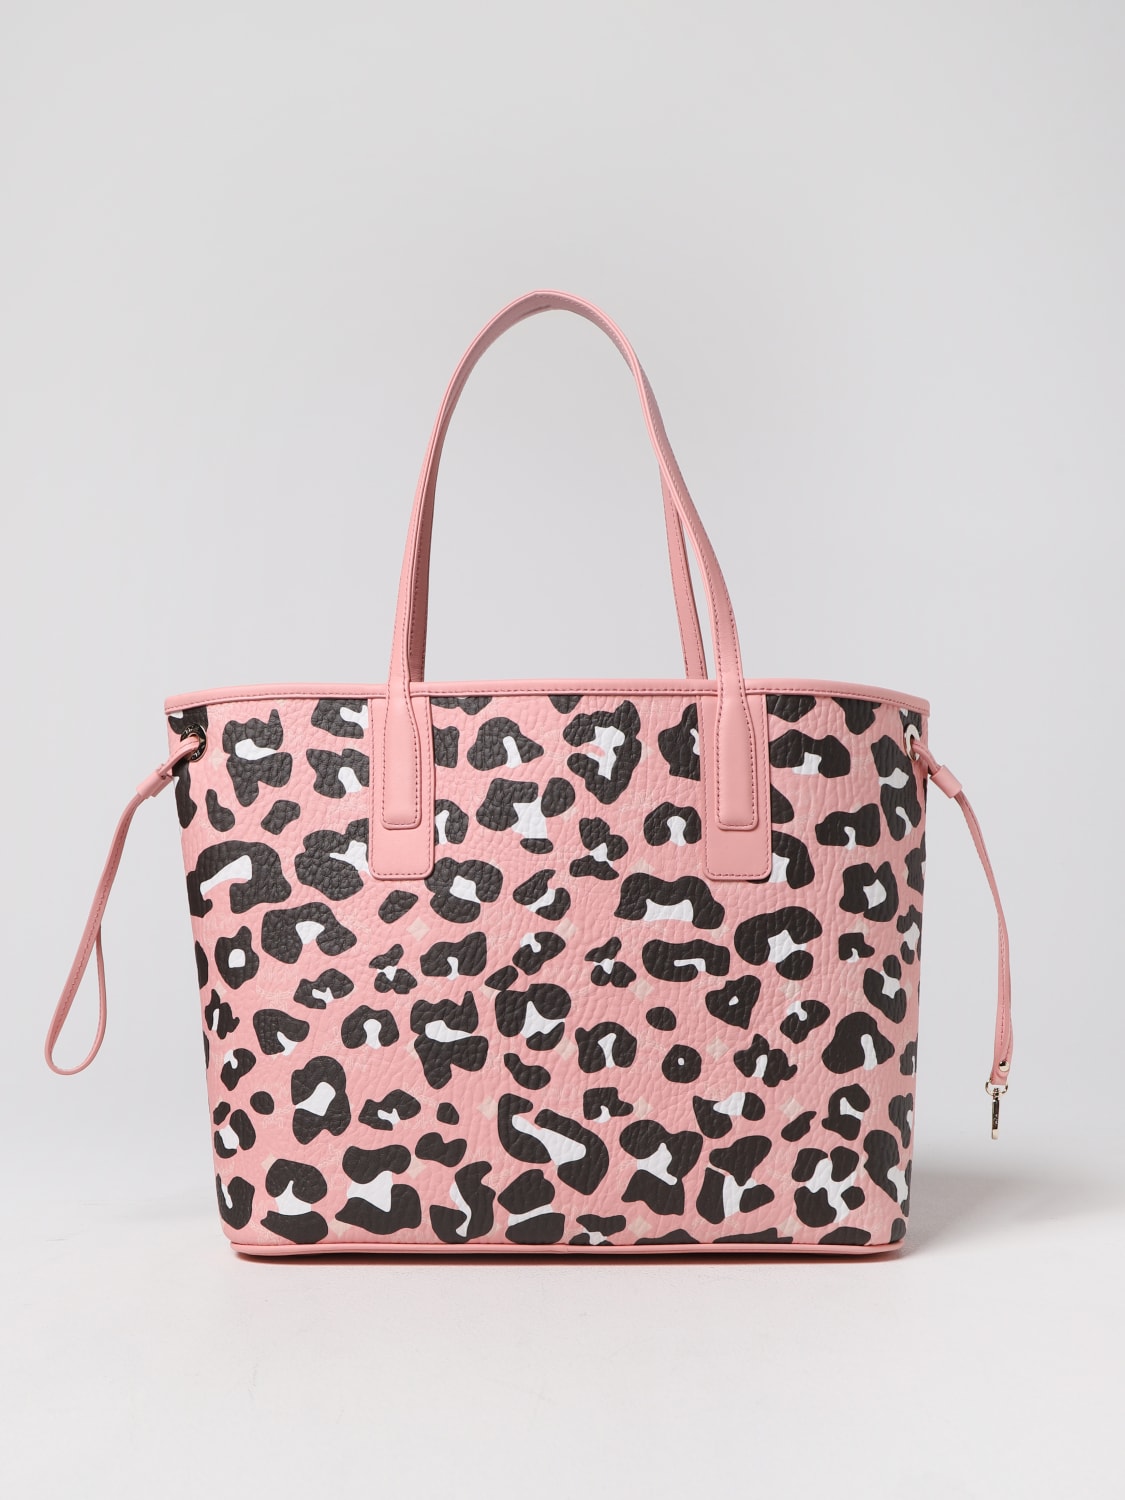 Pink Tote Bags